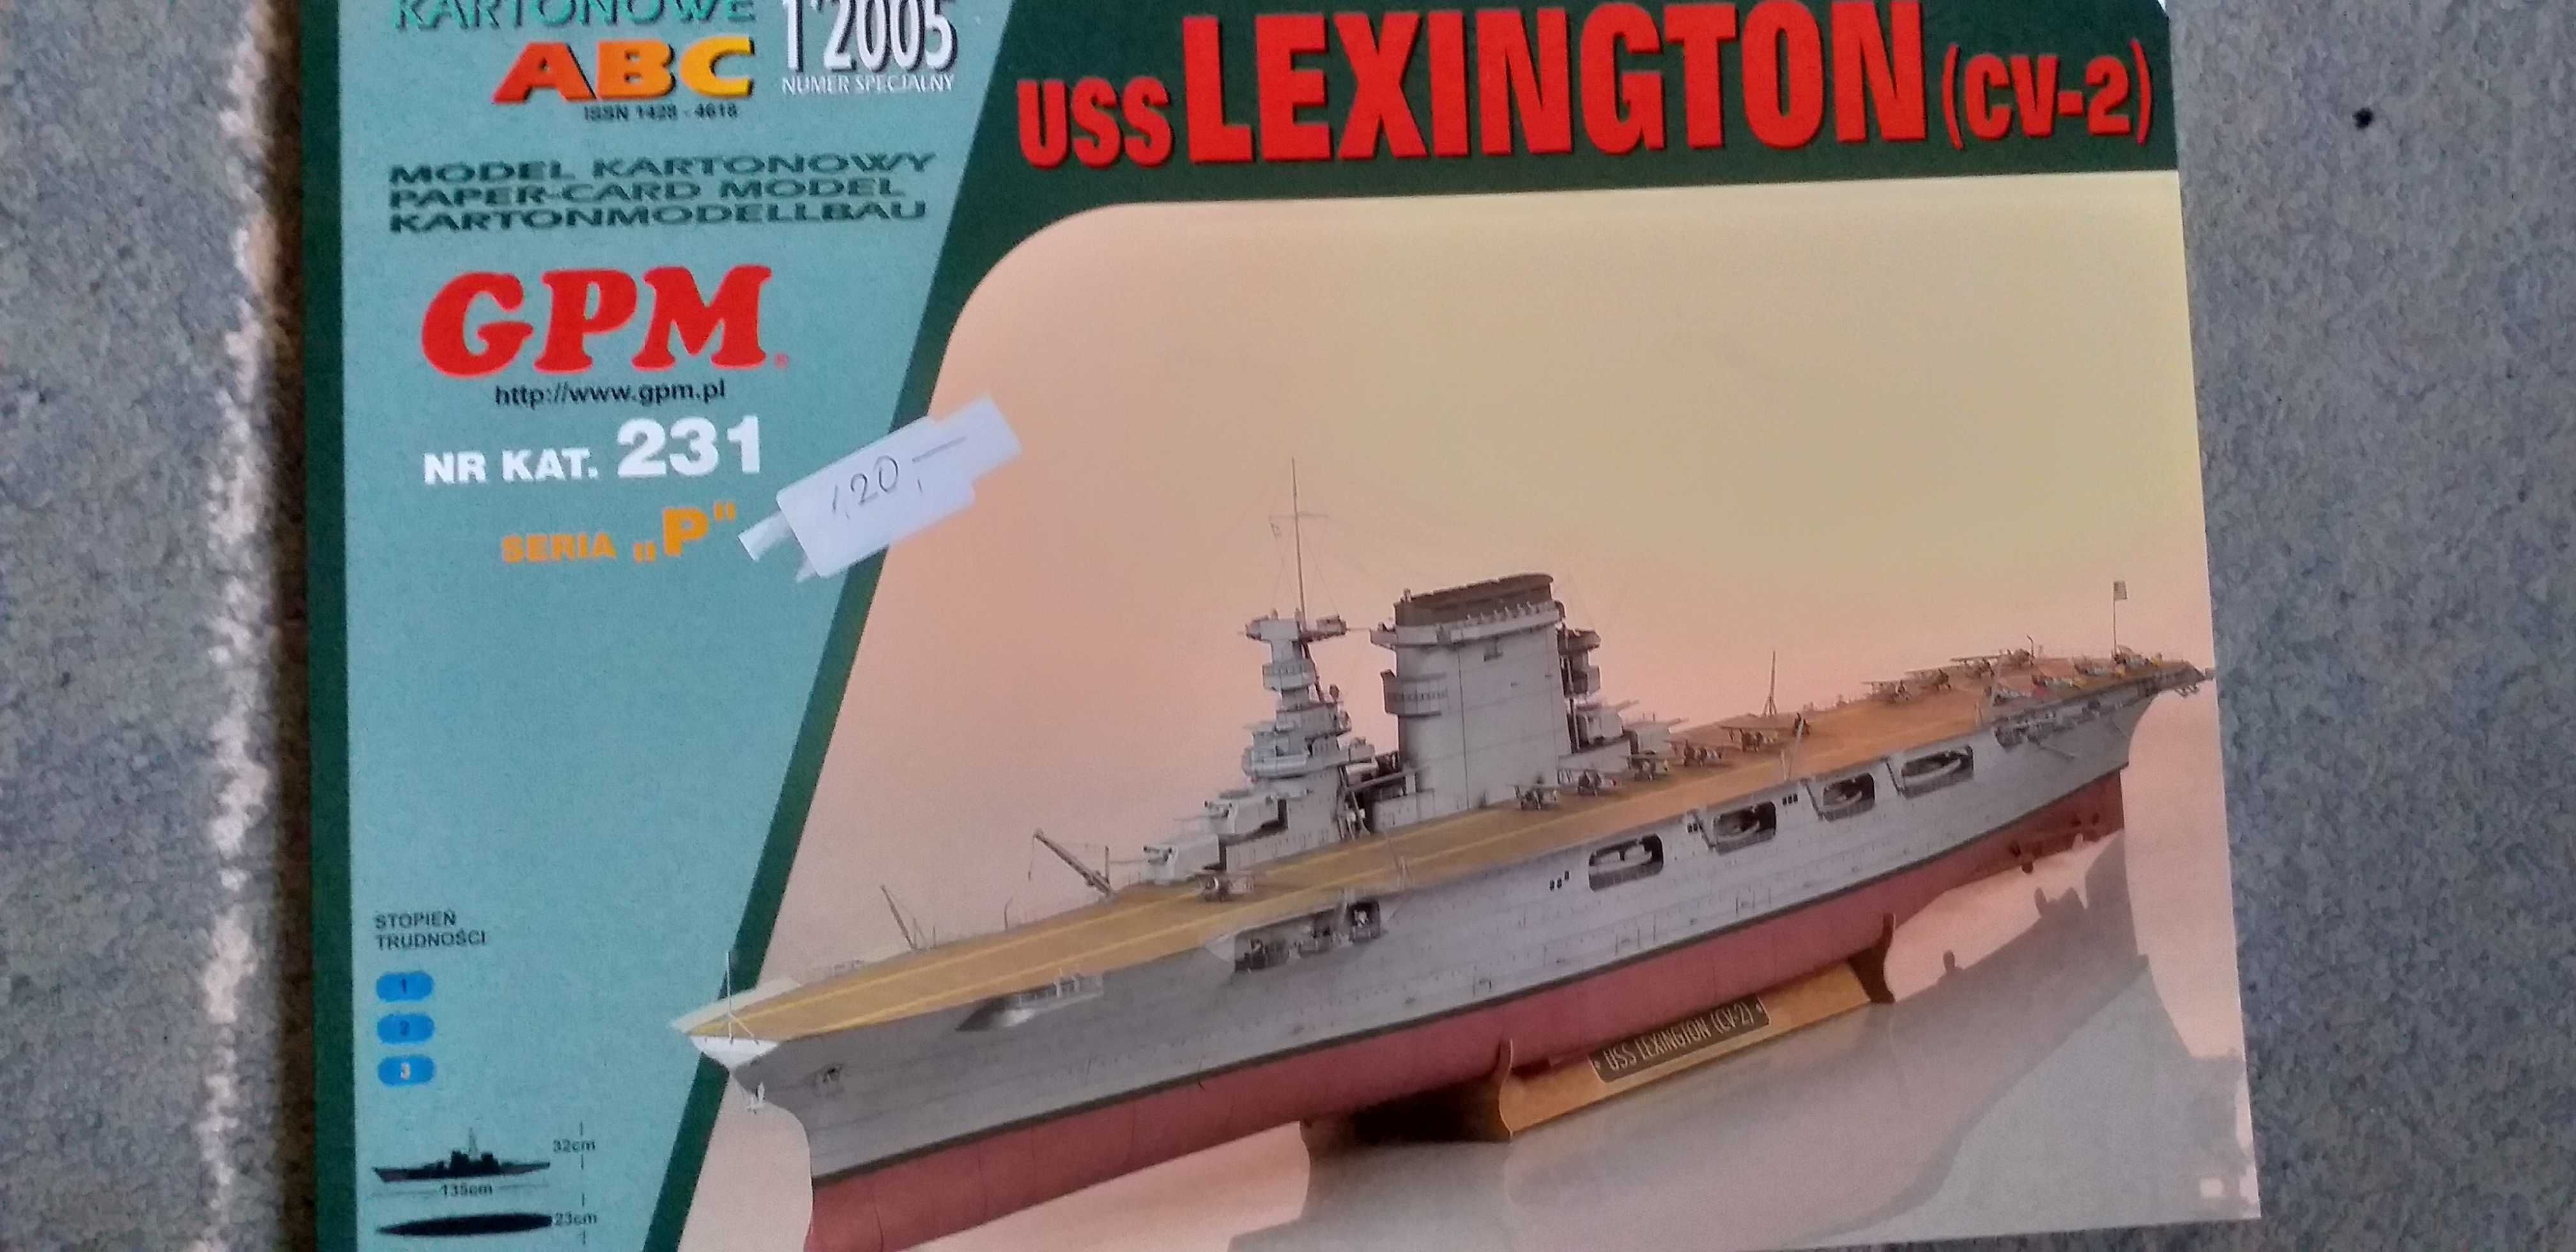 USS Lexington model kartonowy